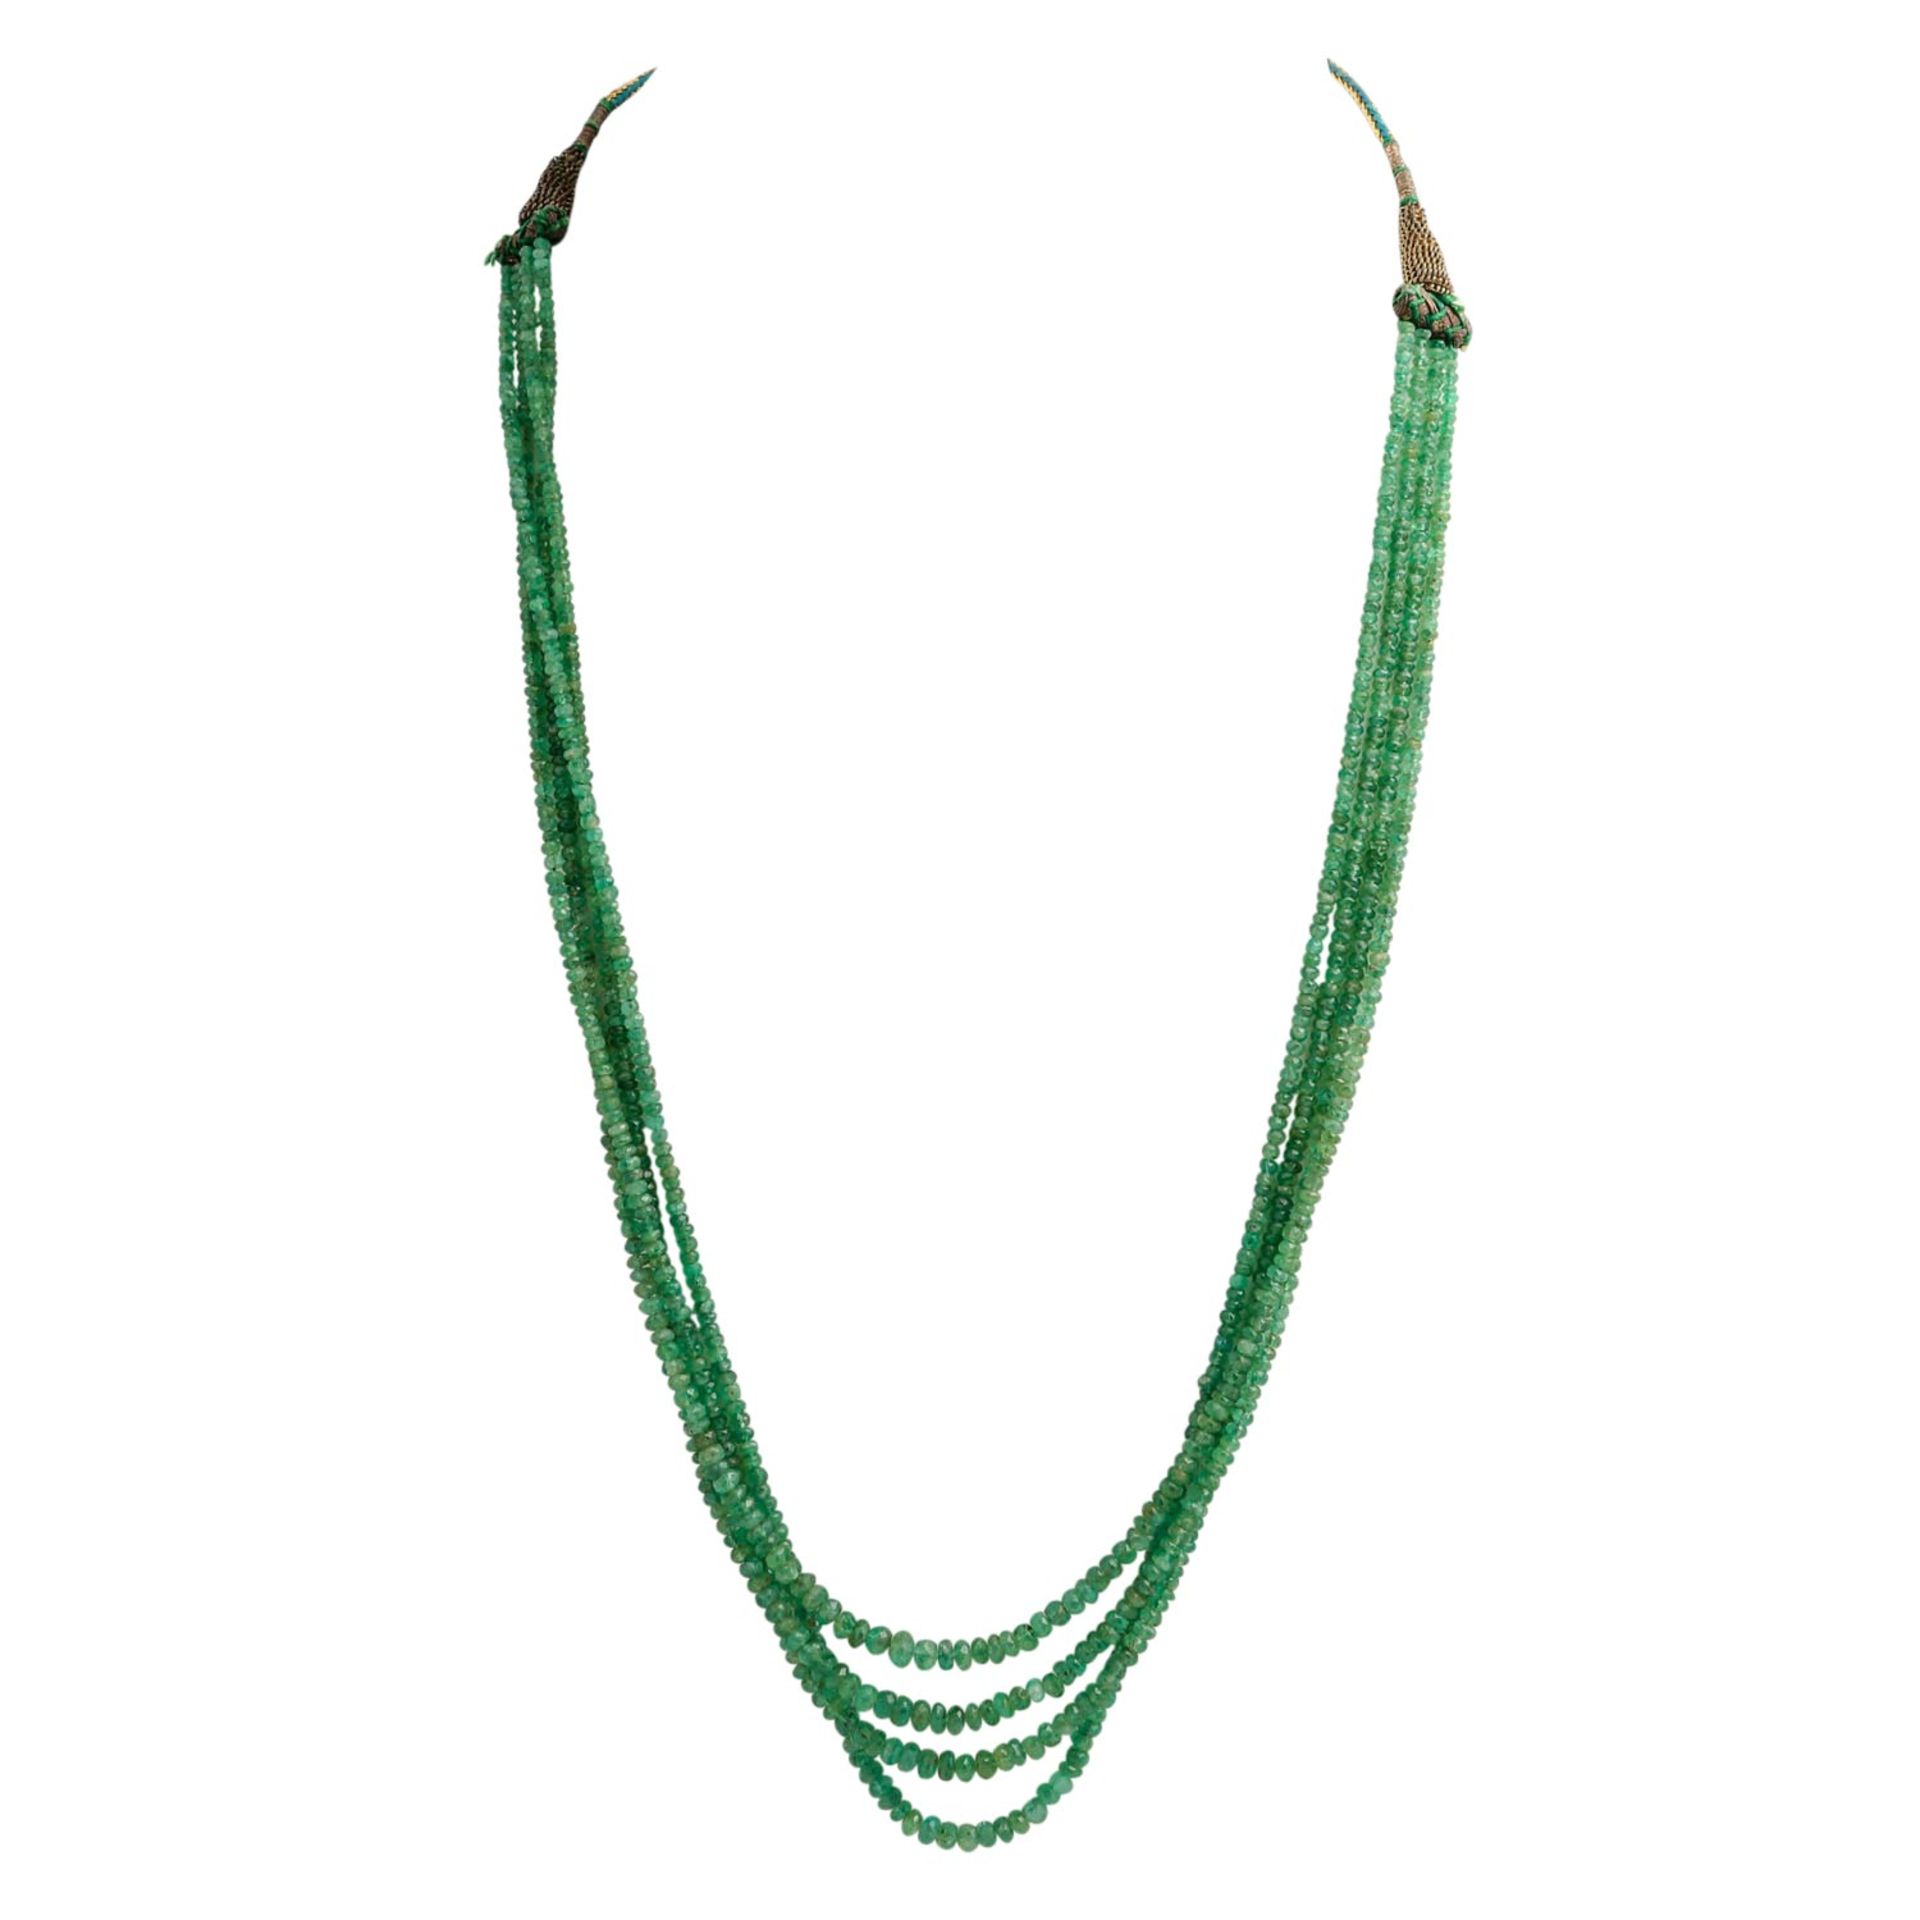 Smaragdkette 4-reihig, facettierte Linsen ca. 2,5-5 mm im Verlauf, tansparent bis tran